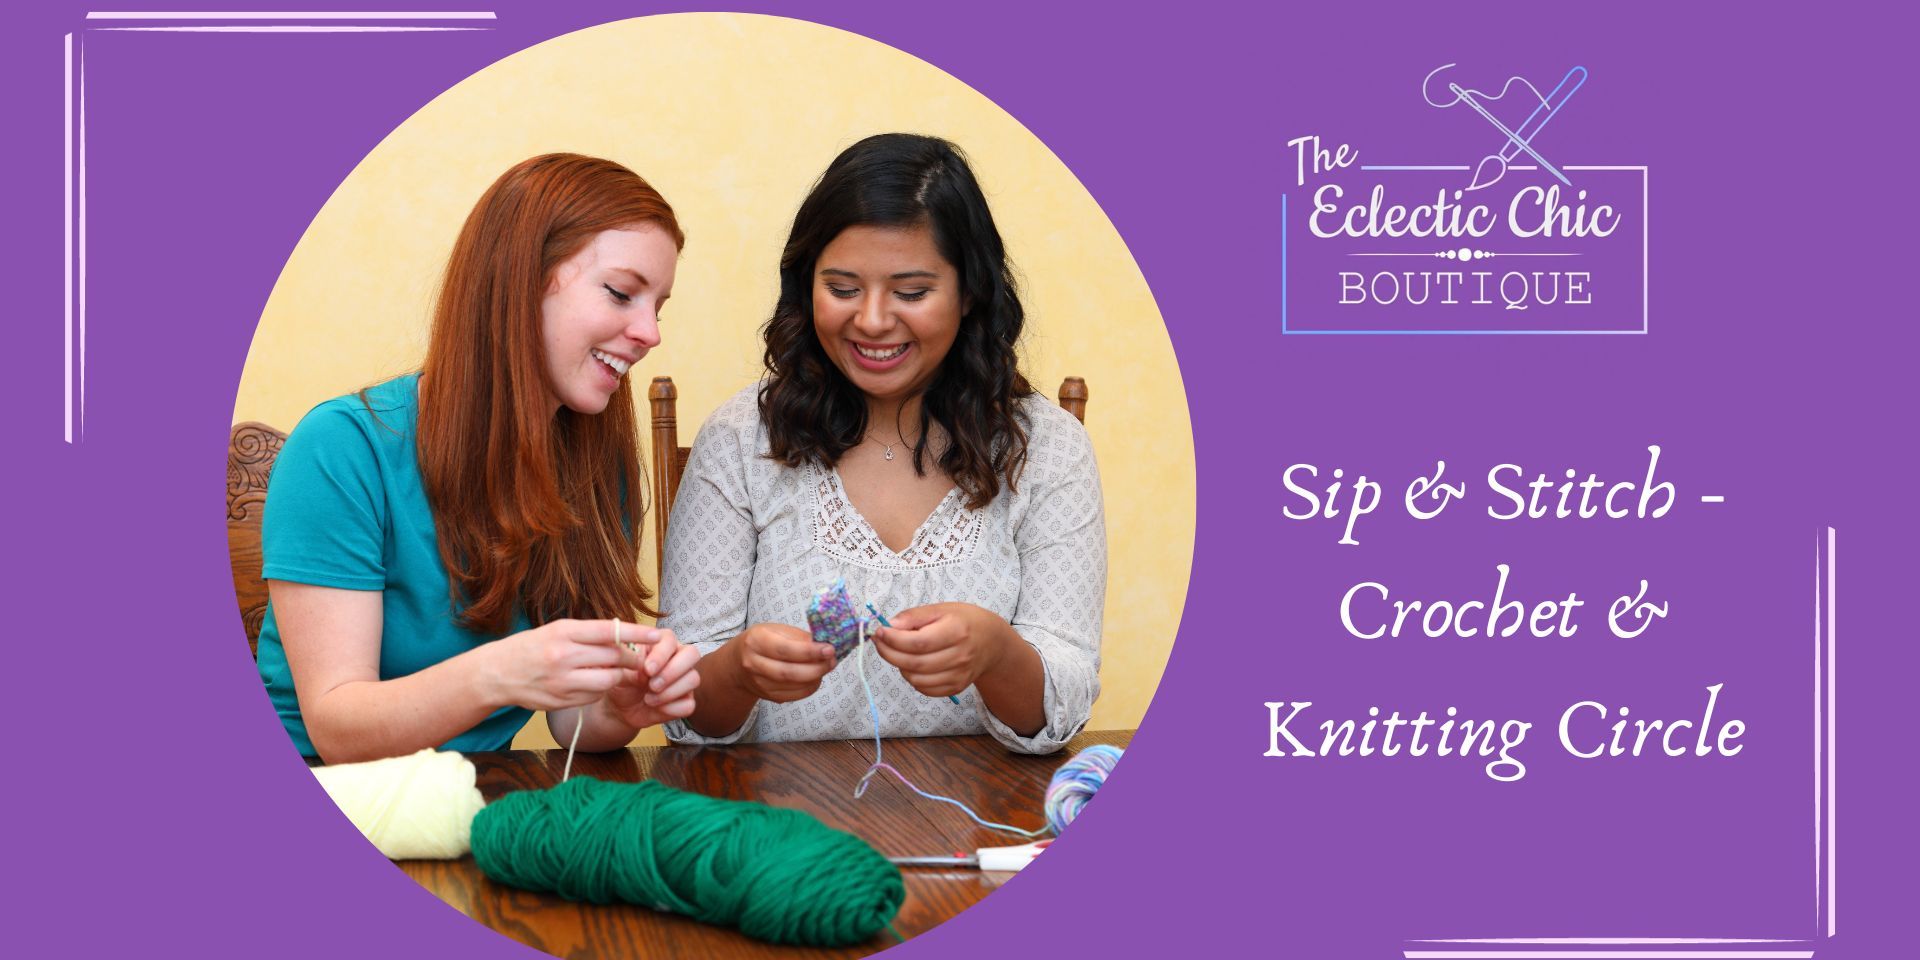 Sip & Stitch - Crochet & Knitting Circle promotional image